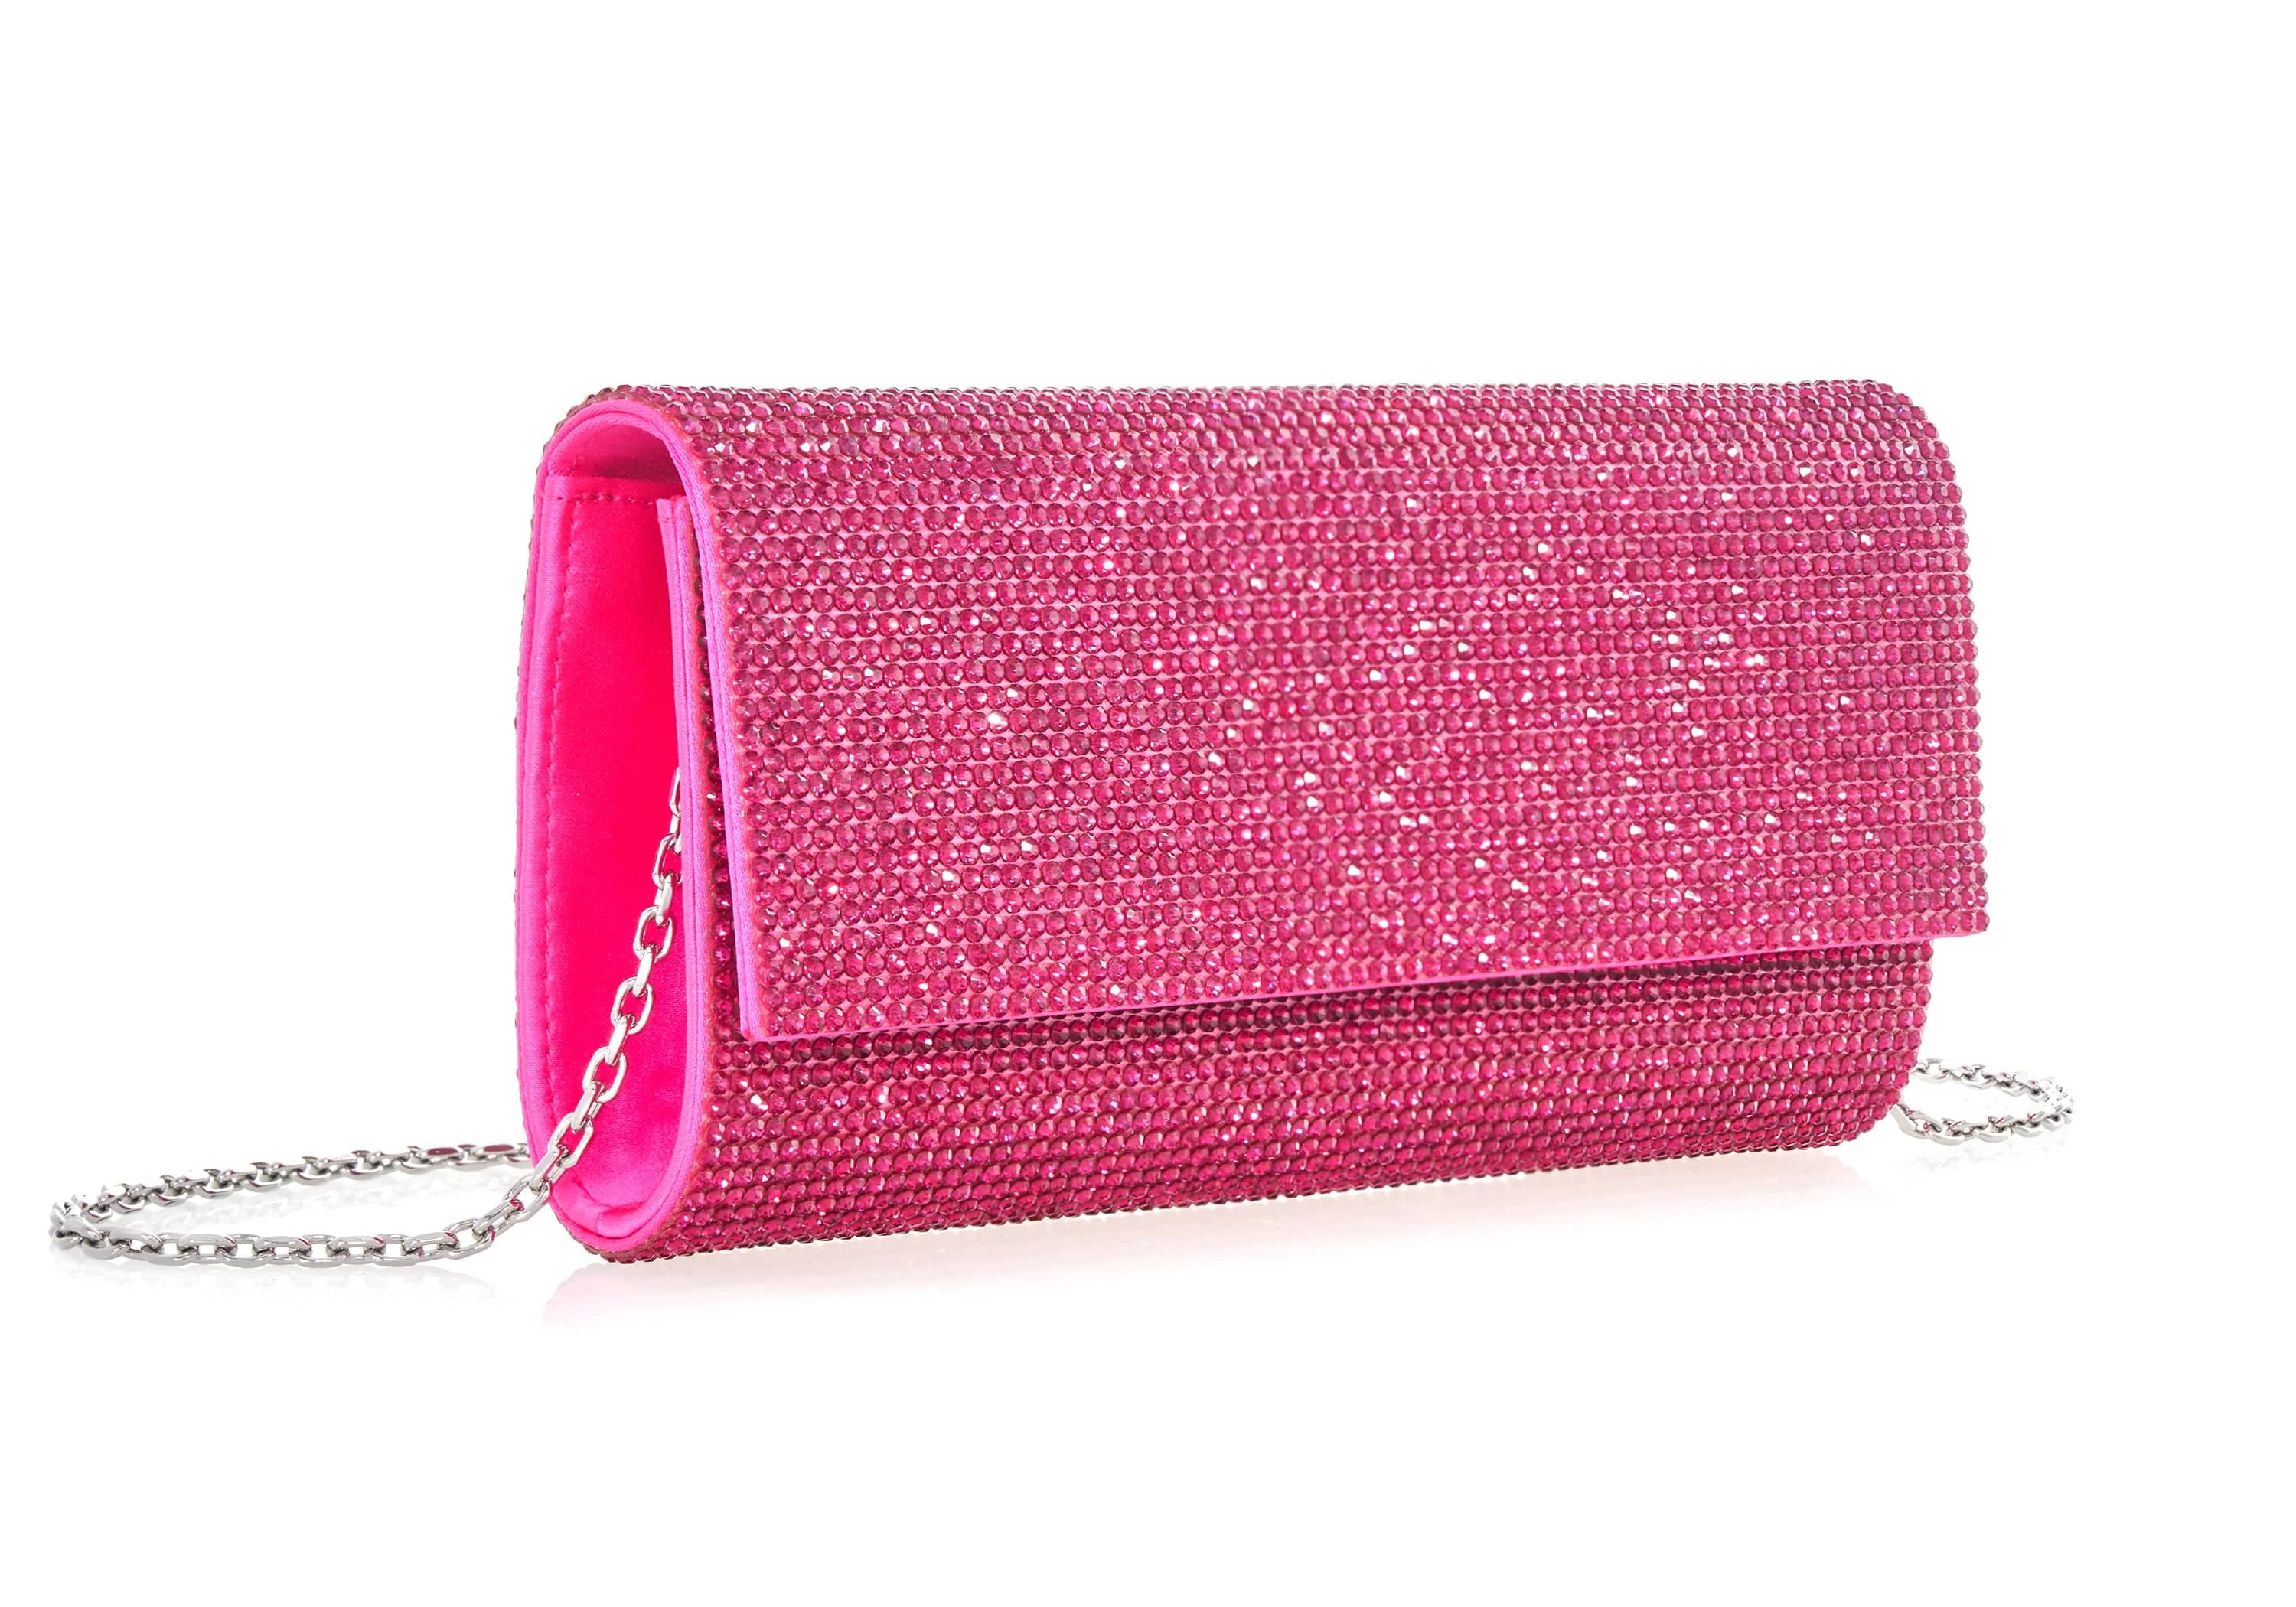 Buy Hot Pink Handbag Online In India - Etsy India